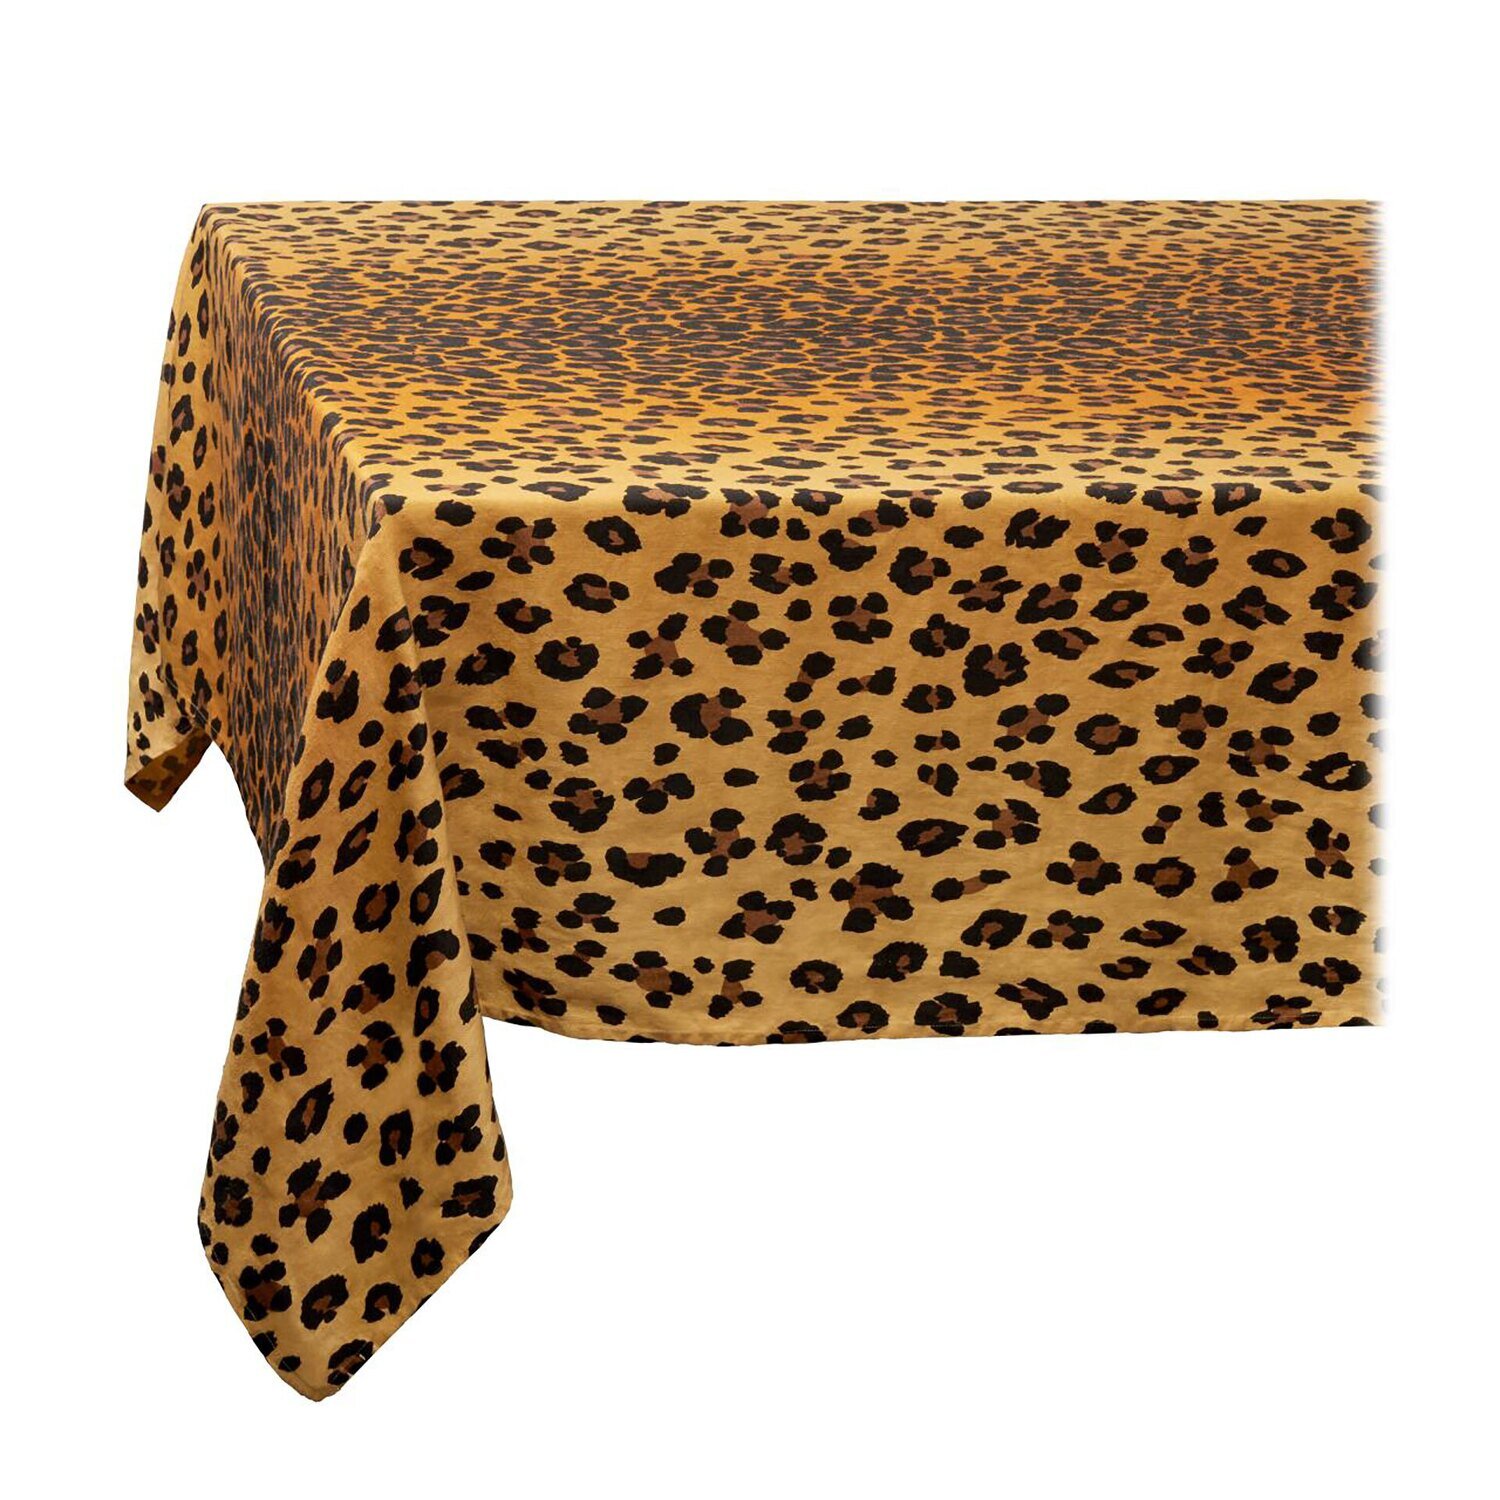 L'Objet Linen Sateen Leopard Tablecloth Large Natural LN5521